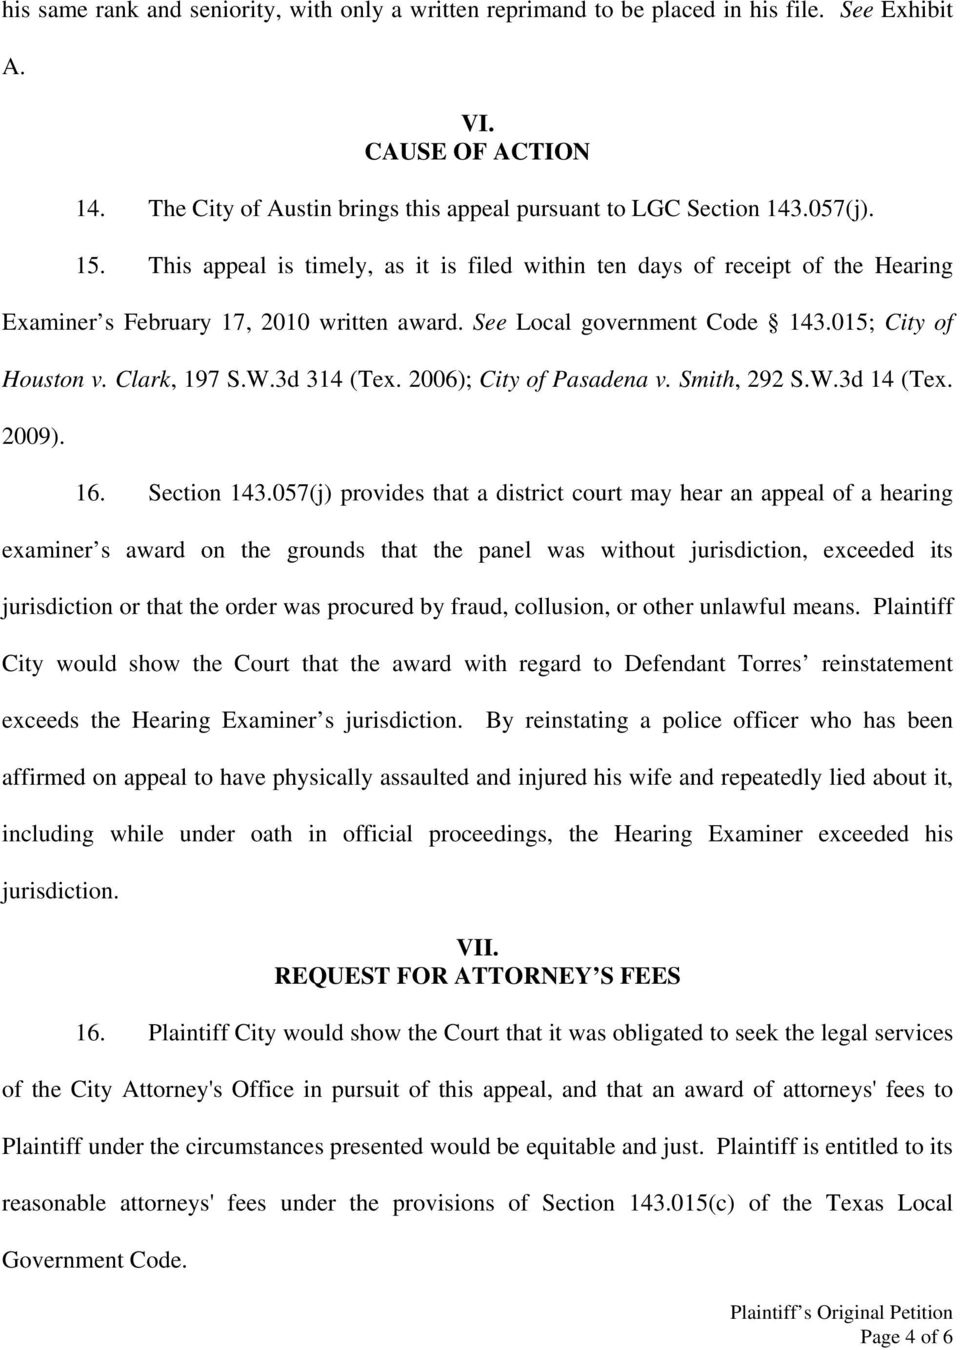 3d 314 (Tex. 2006); City of Pasadena v. Smith, 292 S.W.3d 14 (Tex. 2009). 16. Section 143.